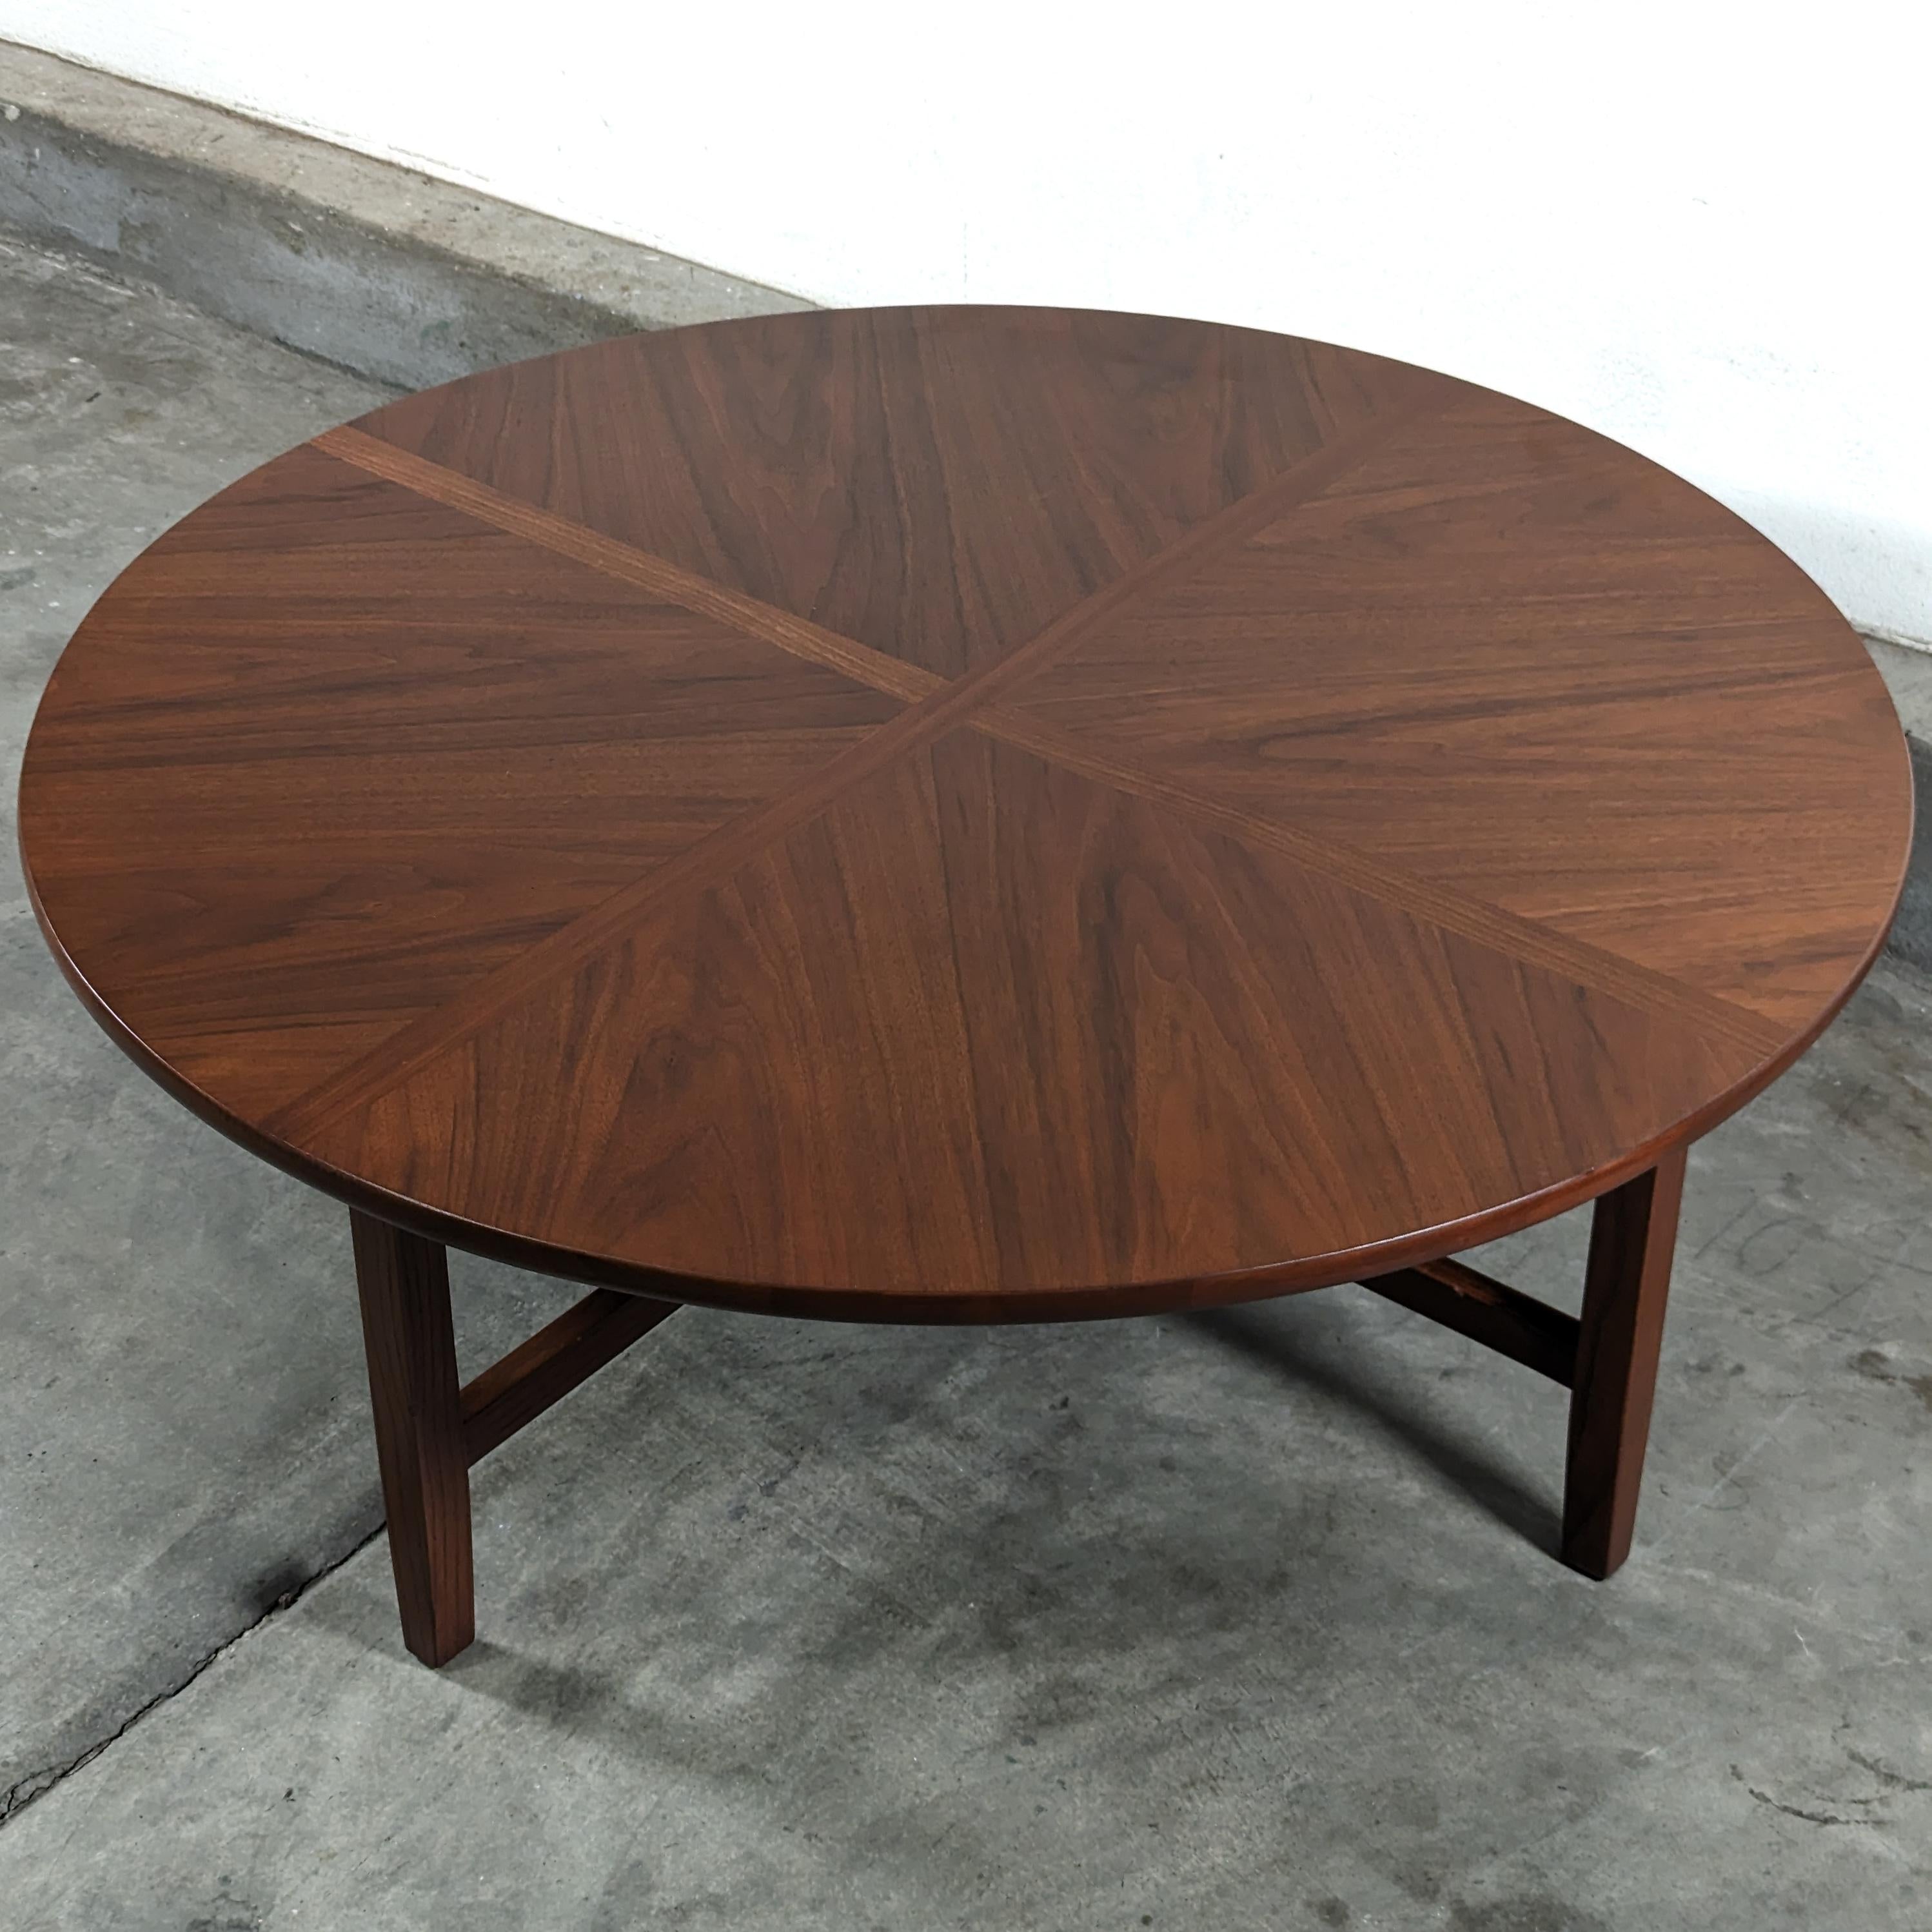 American Refinished Mid Century Modern Walnut & Oak Coffee Table, c1960s